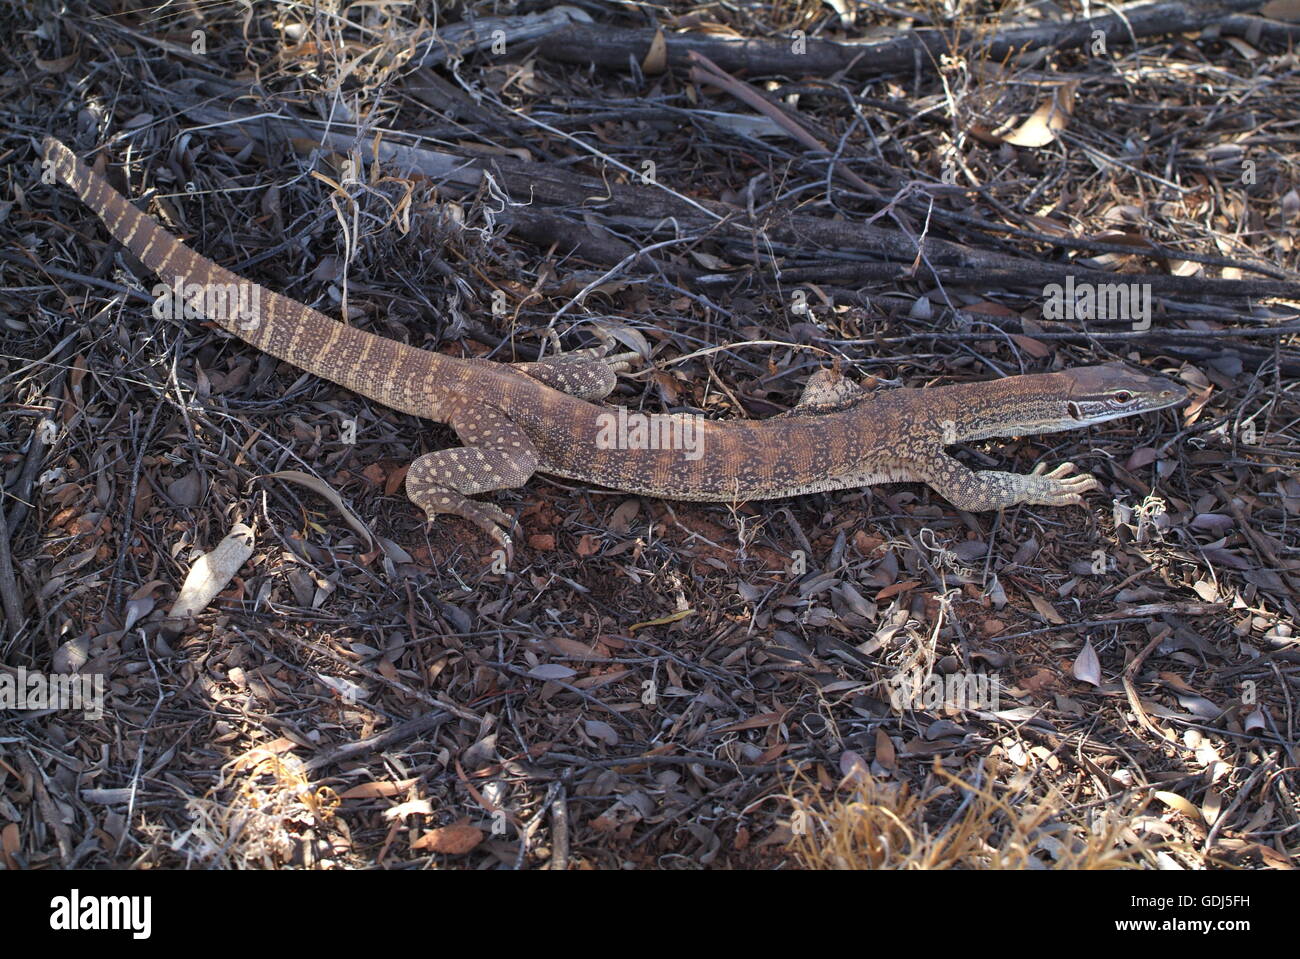 Zoología / animales, reptiles, lagartos, arena goanna, (Varanus gouldii), distribución: Australia, Foto de stock